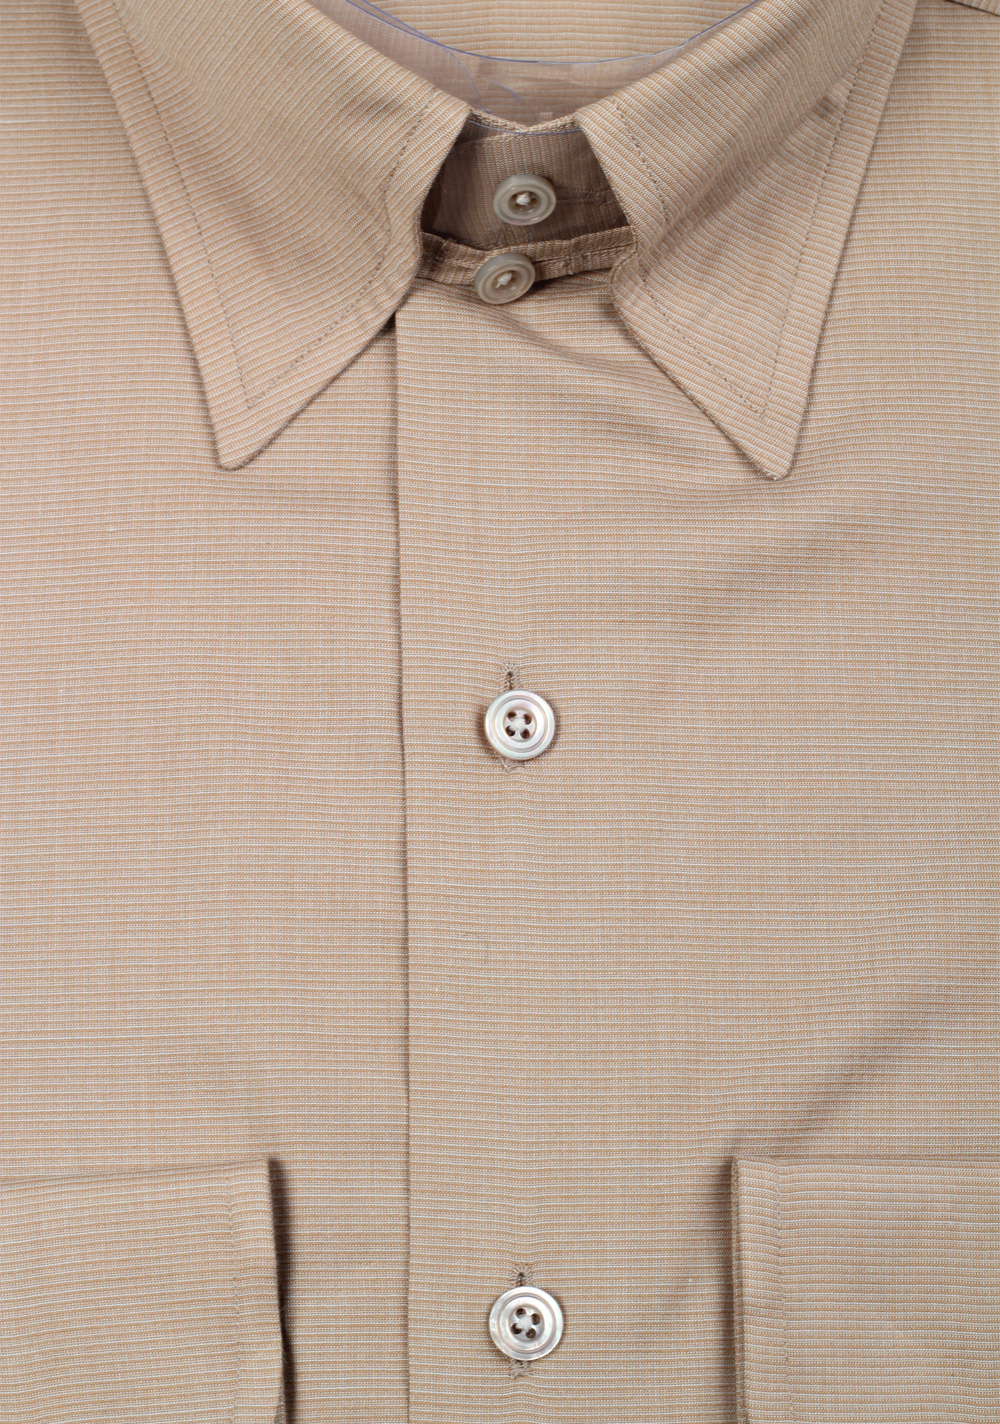 TOM FORD Grayish Beige High Collar Dress Shirt Size 40 / 15,75 U.S. | Costume Limité